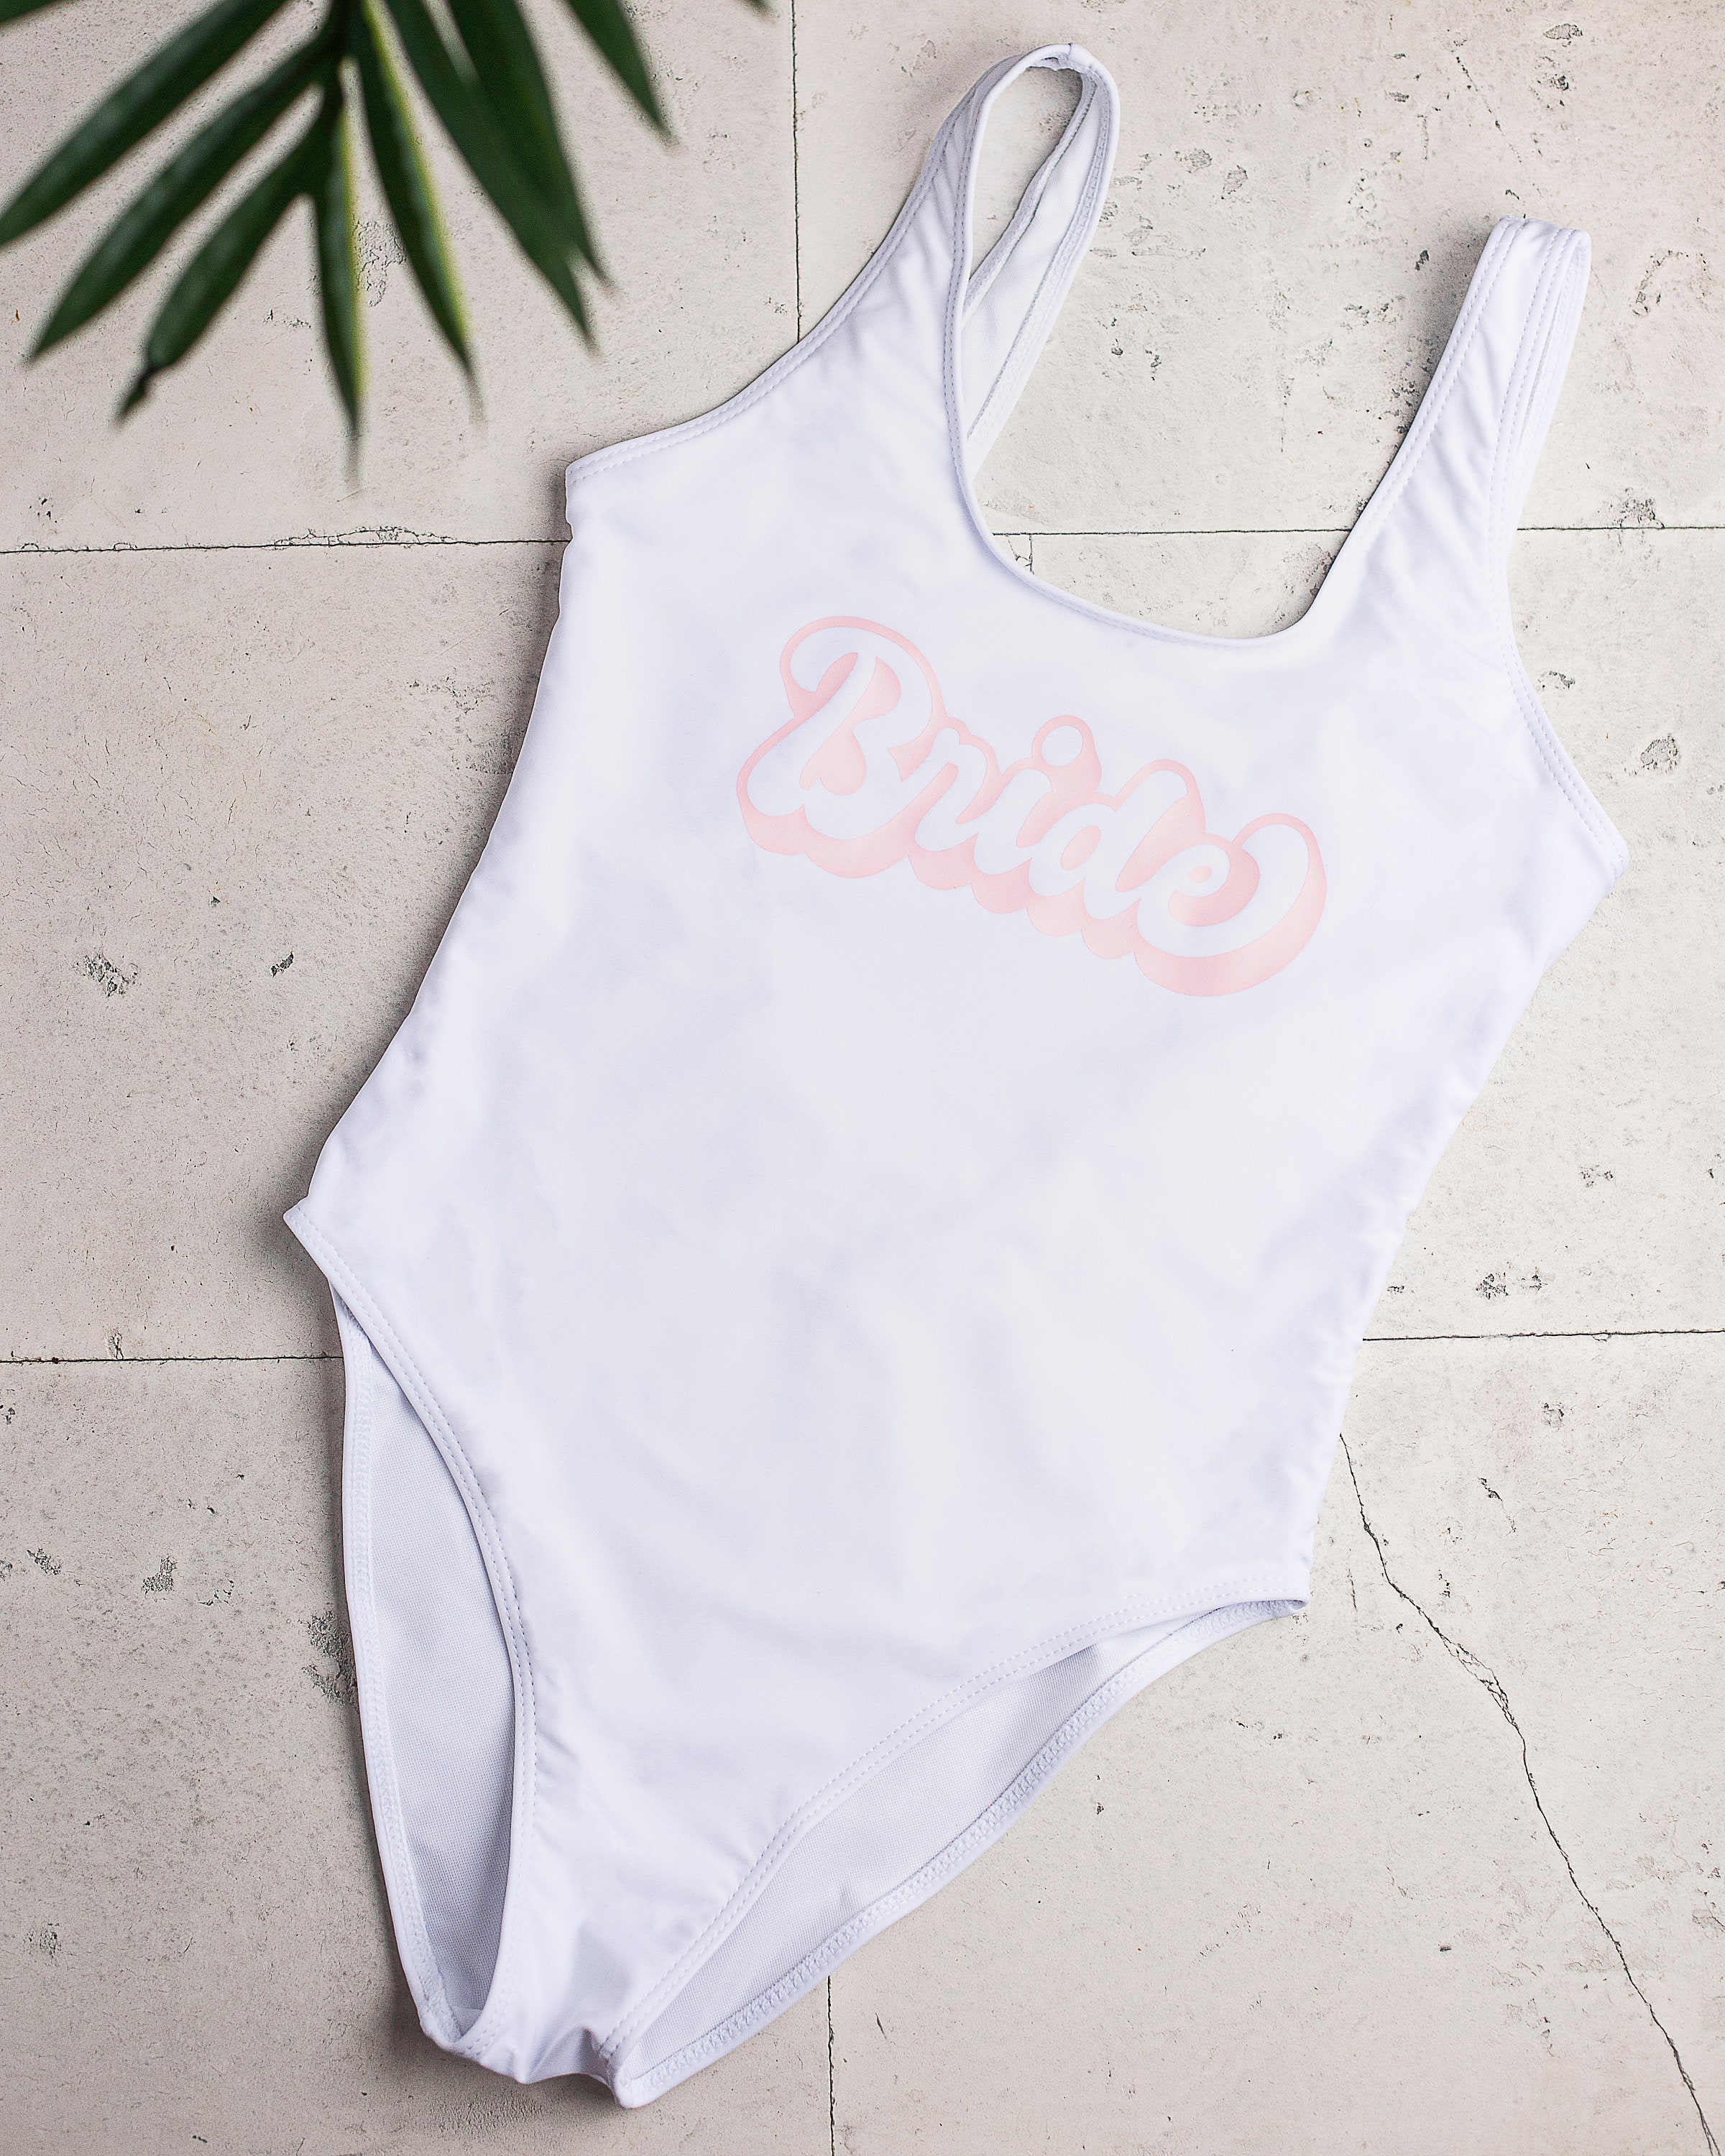 Bride/ Bride Squad Swimsuit Personalized Bride Swimsuit | Etsy